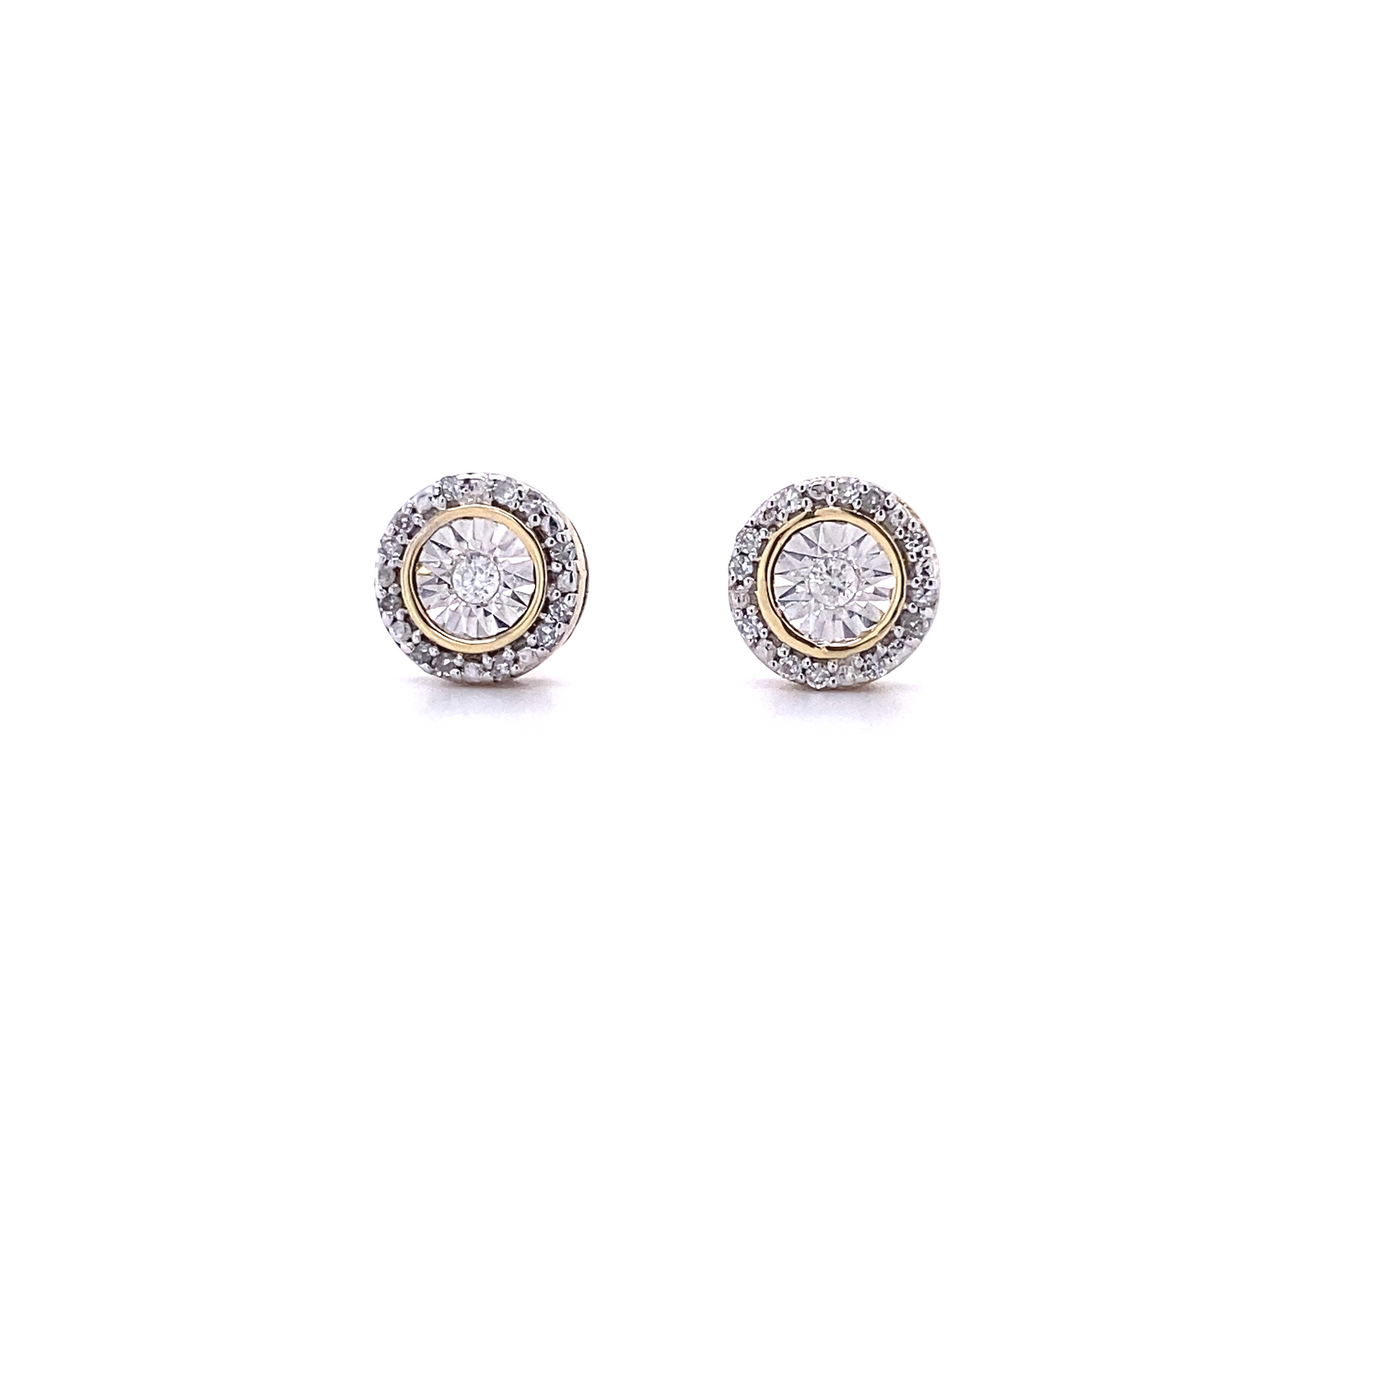 10 Karat White and Yellow Gold Diamond Earrings